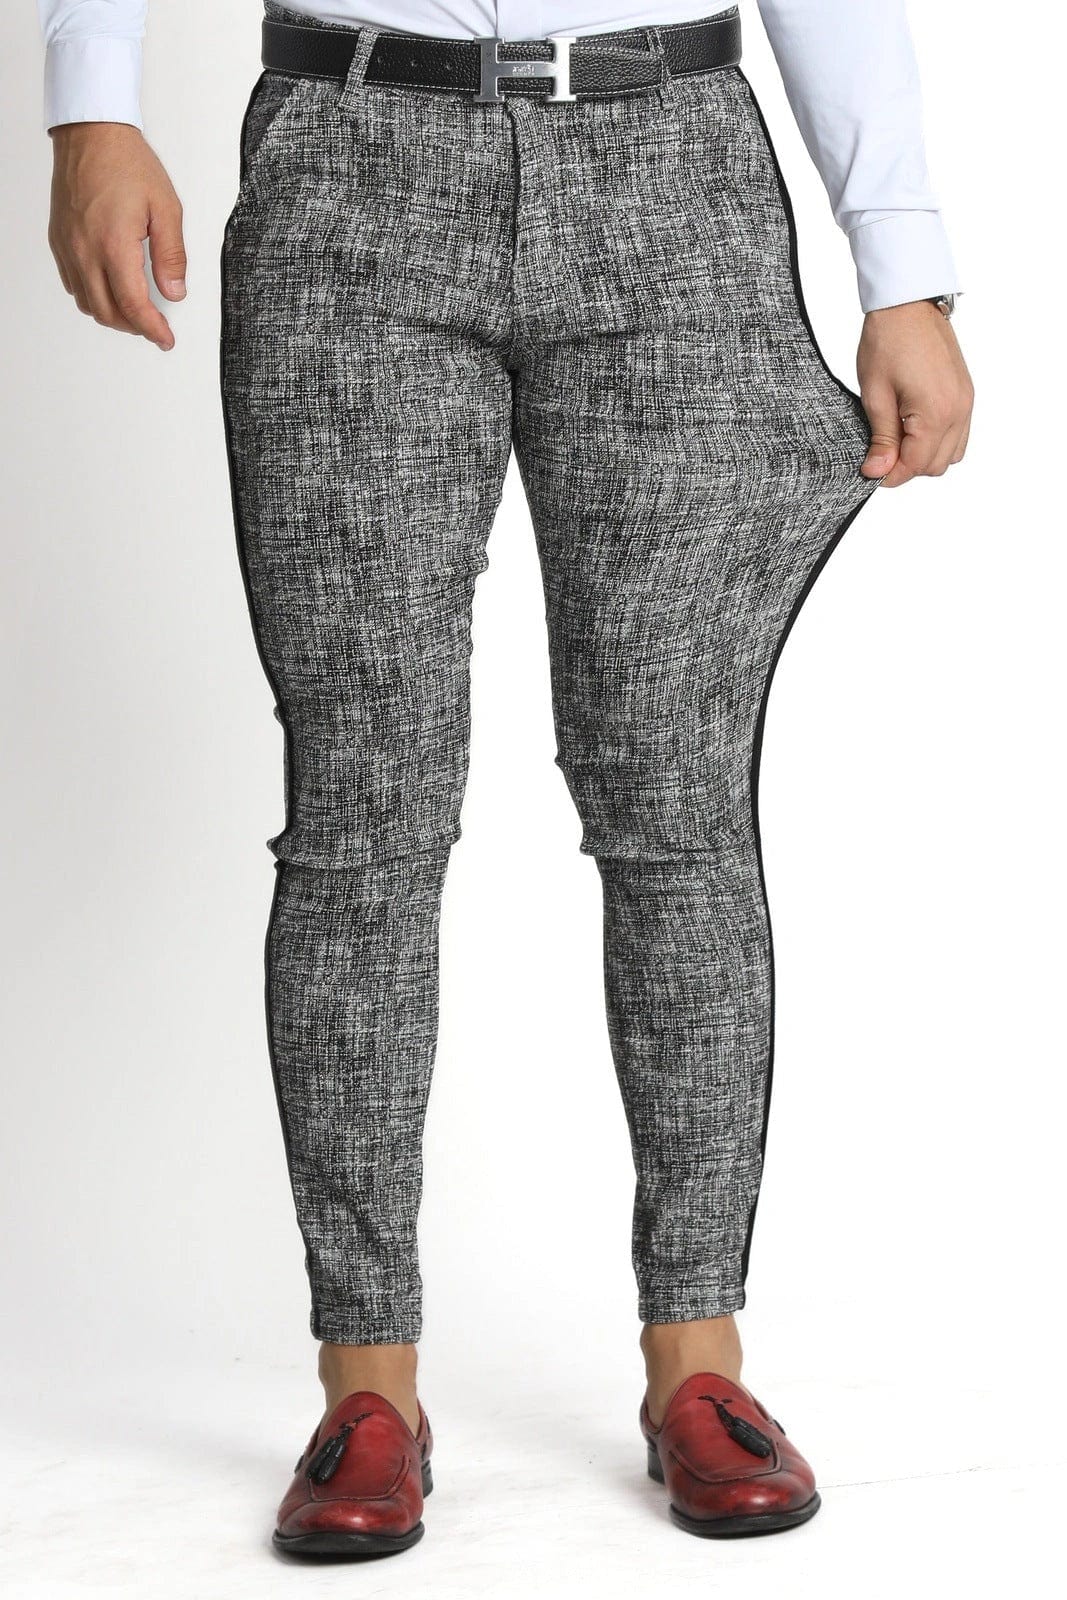 Shop Graphite Grey Slim Fit Dress Pants For Men - Gerardo Collection